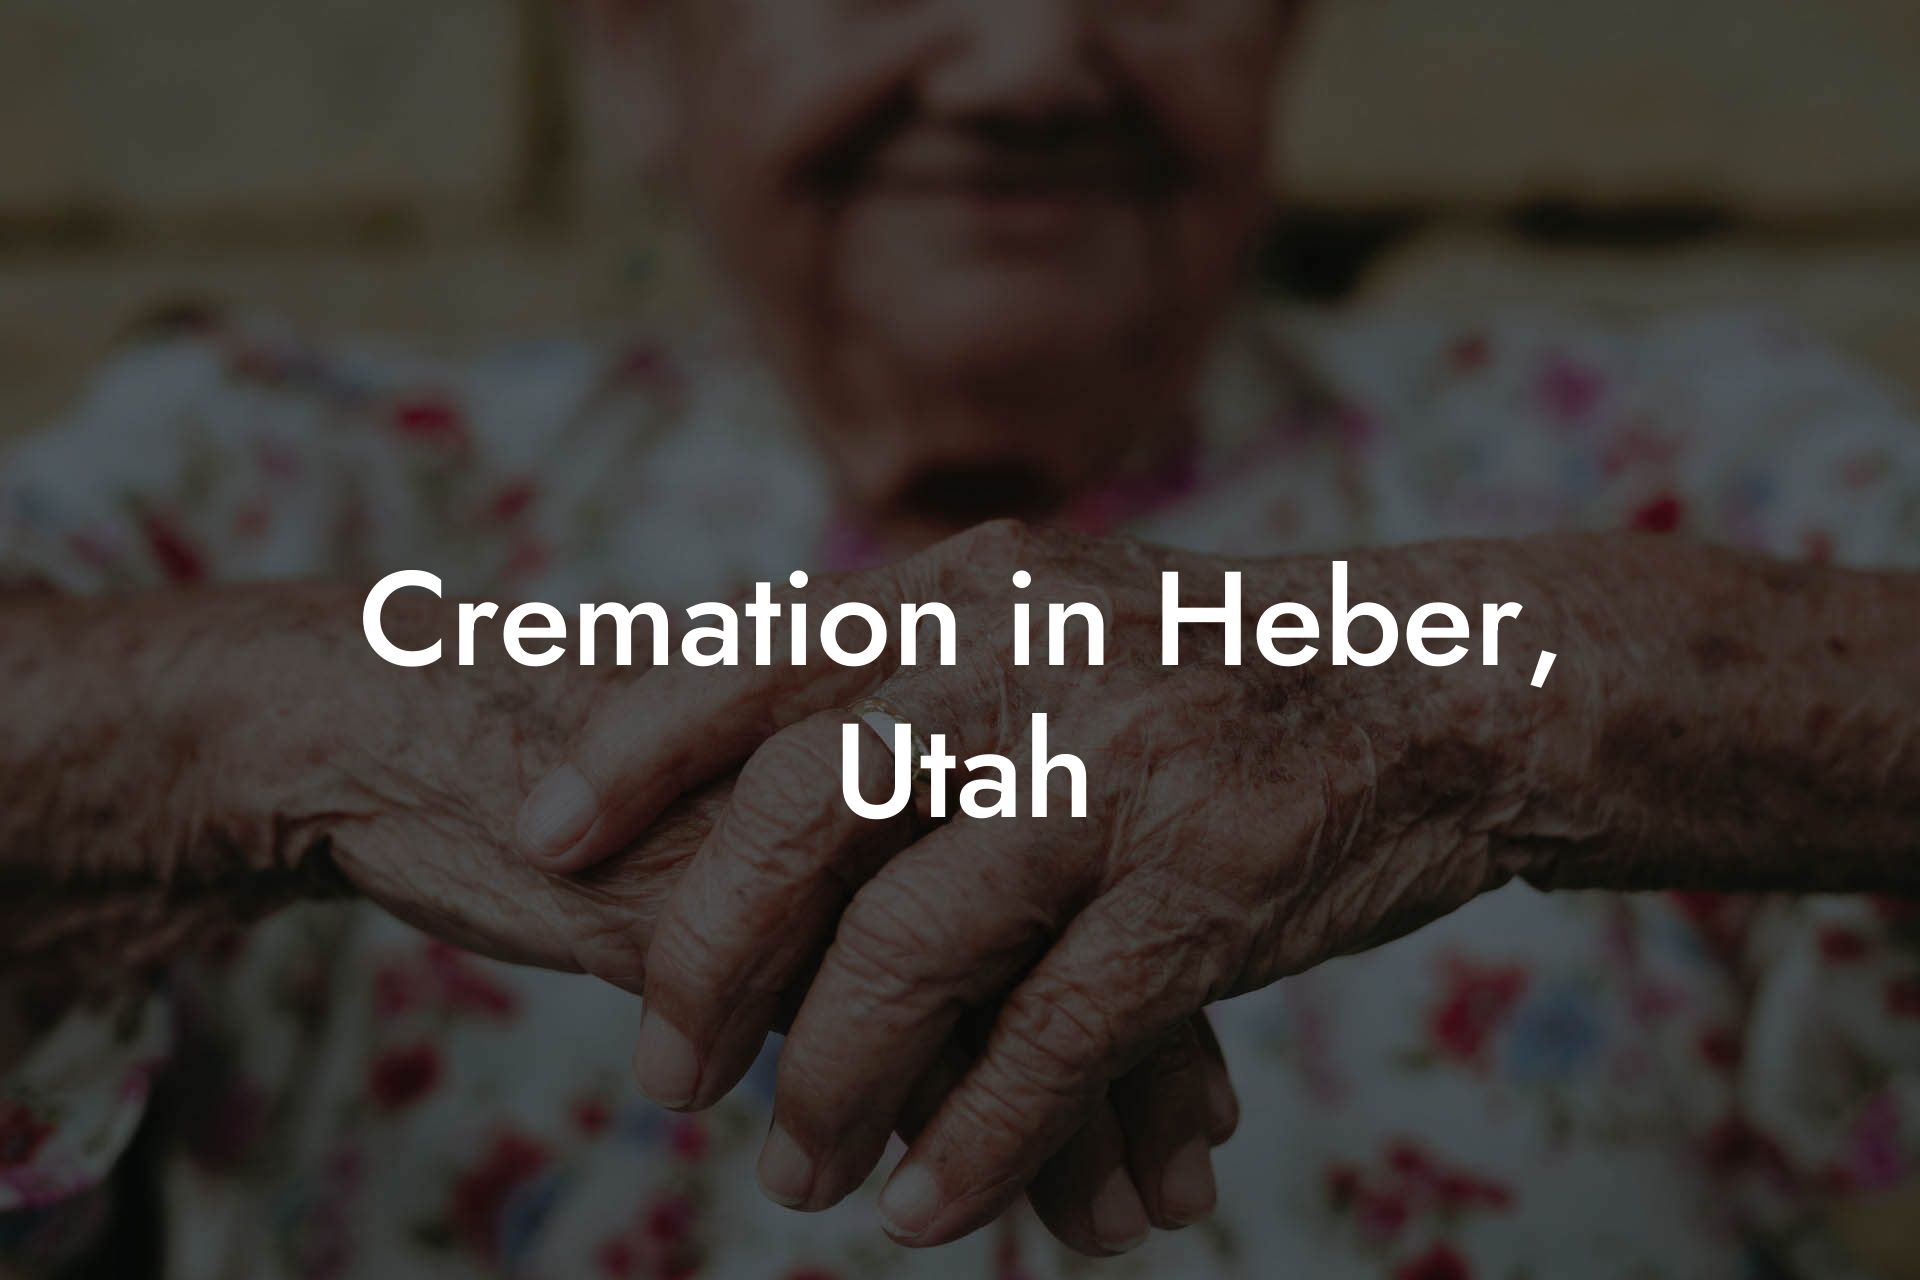 Cremation in Heber, Utah